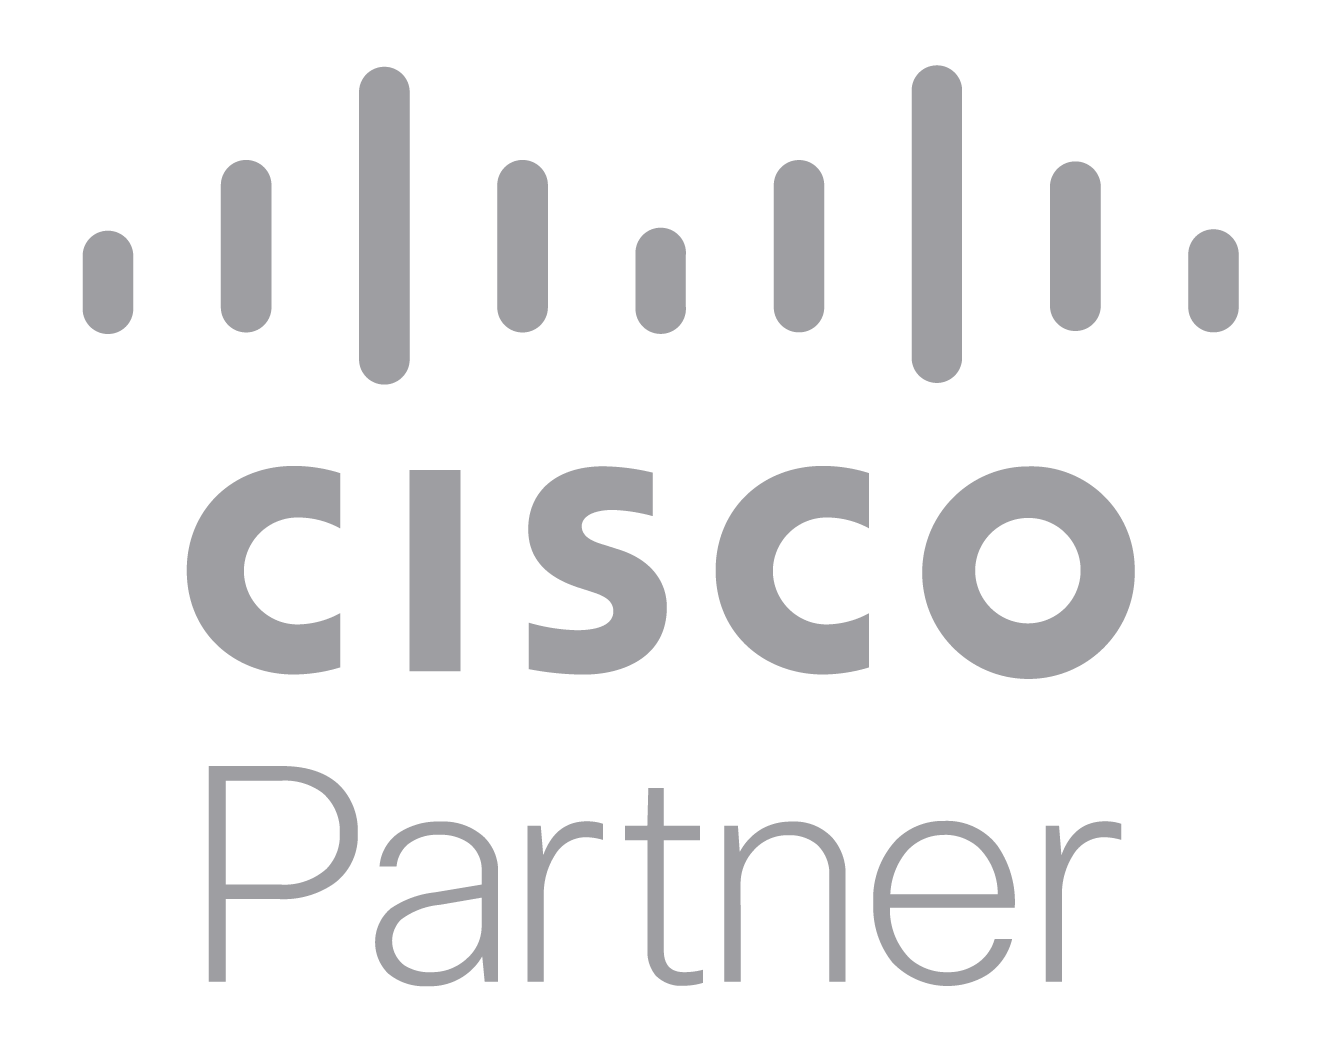 Premier Partner Logo-no specify